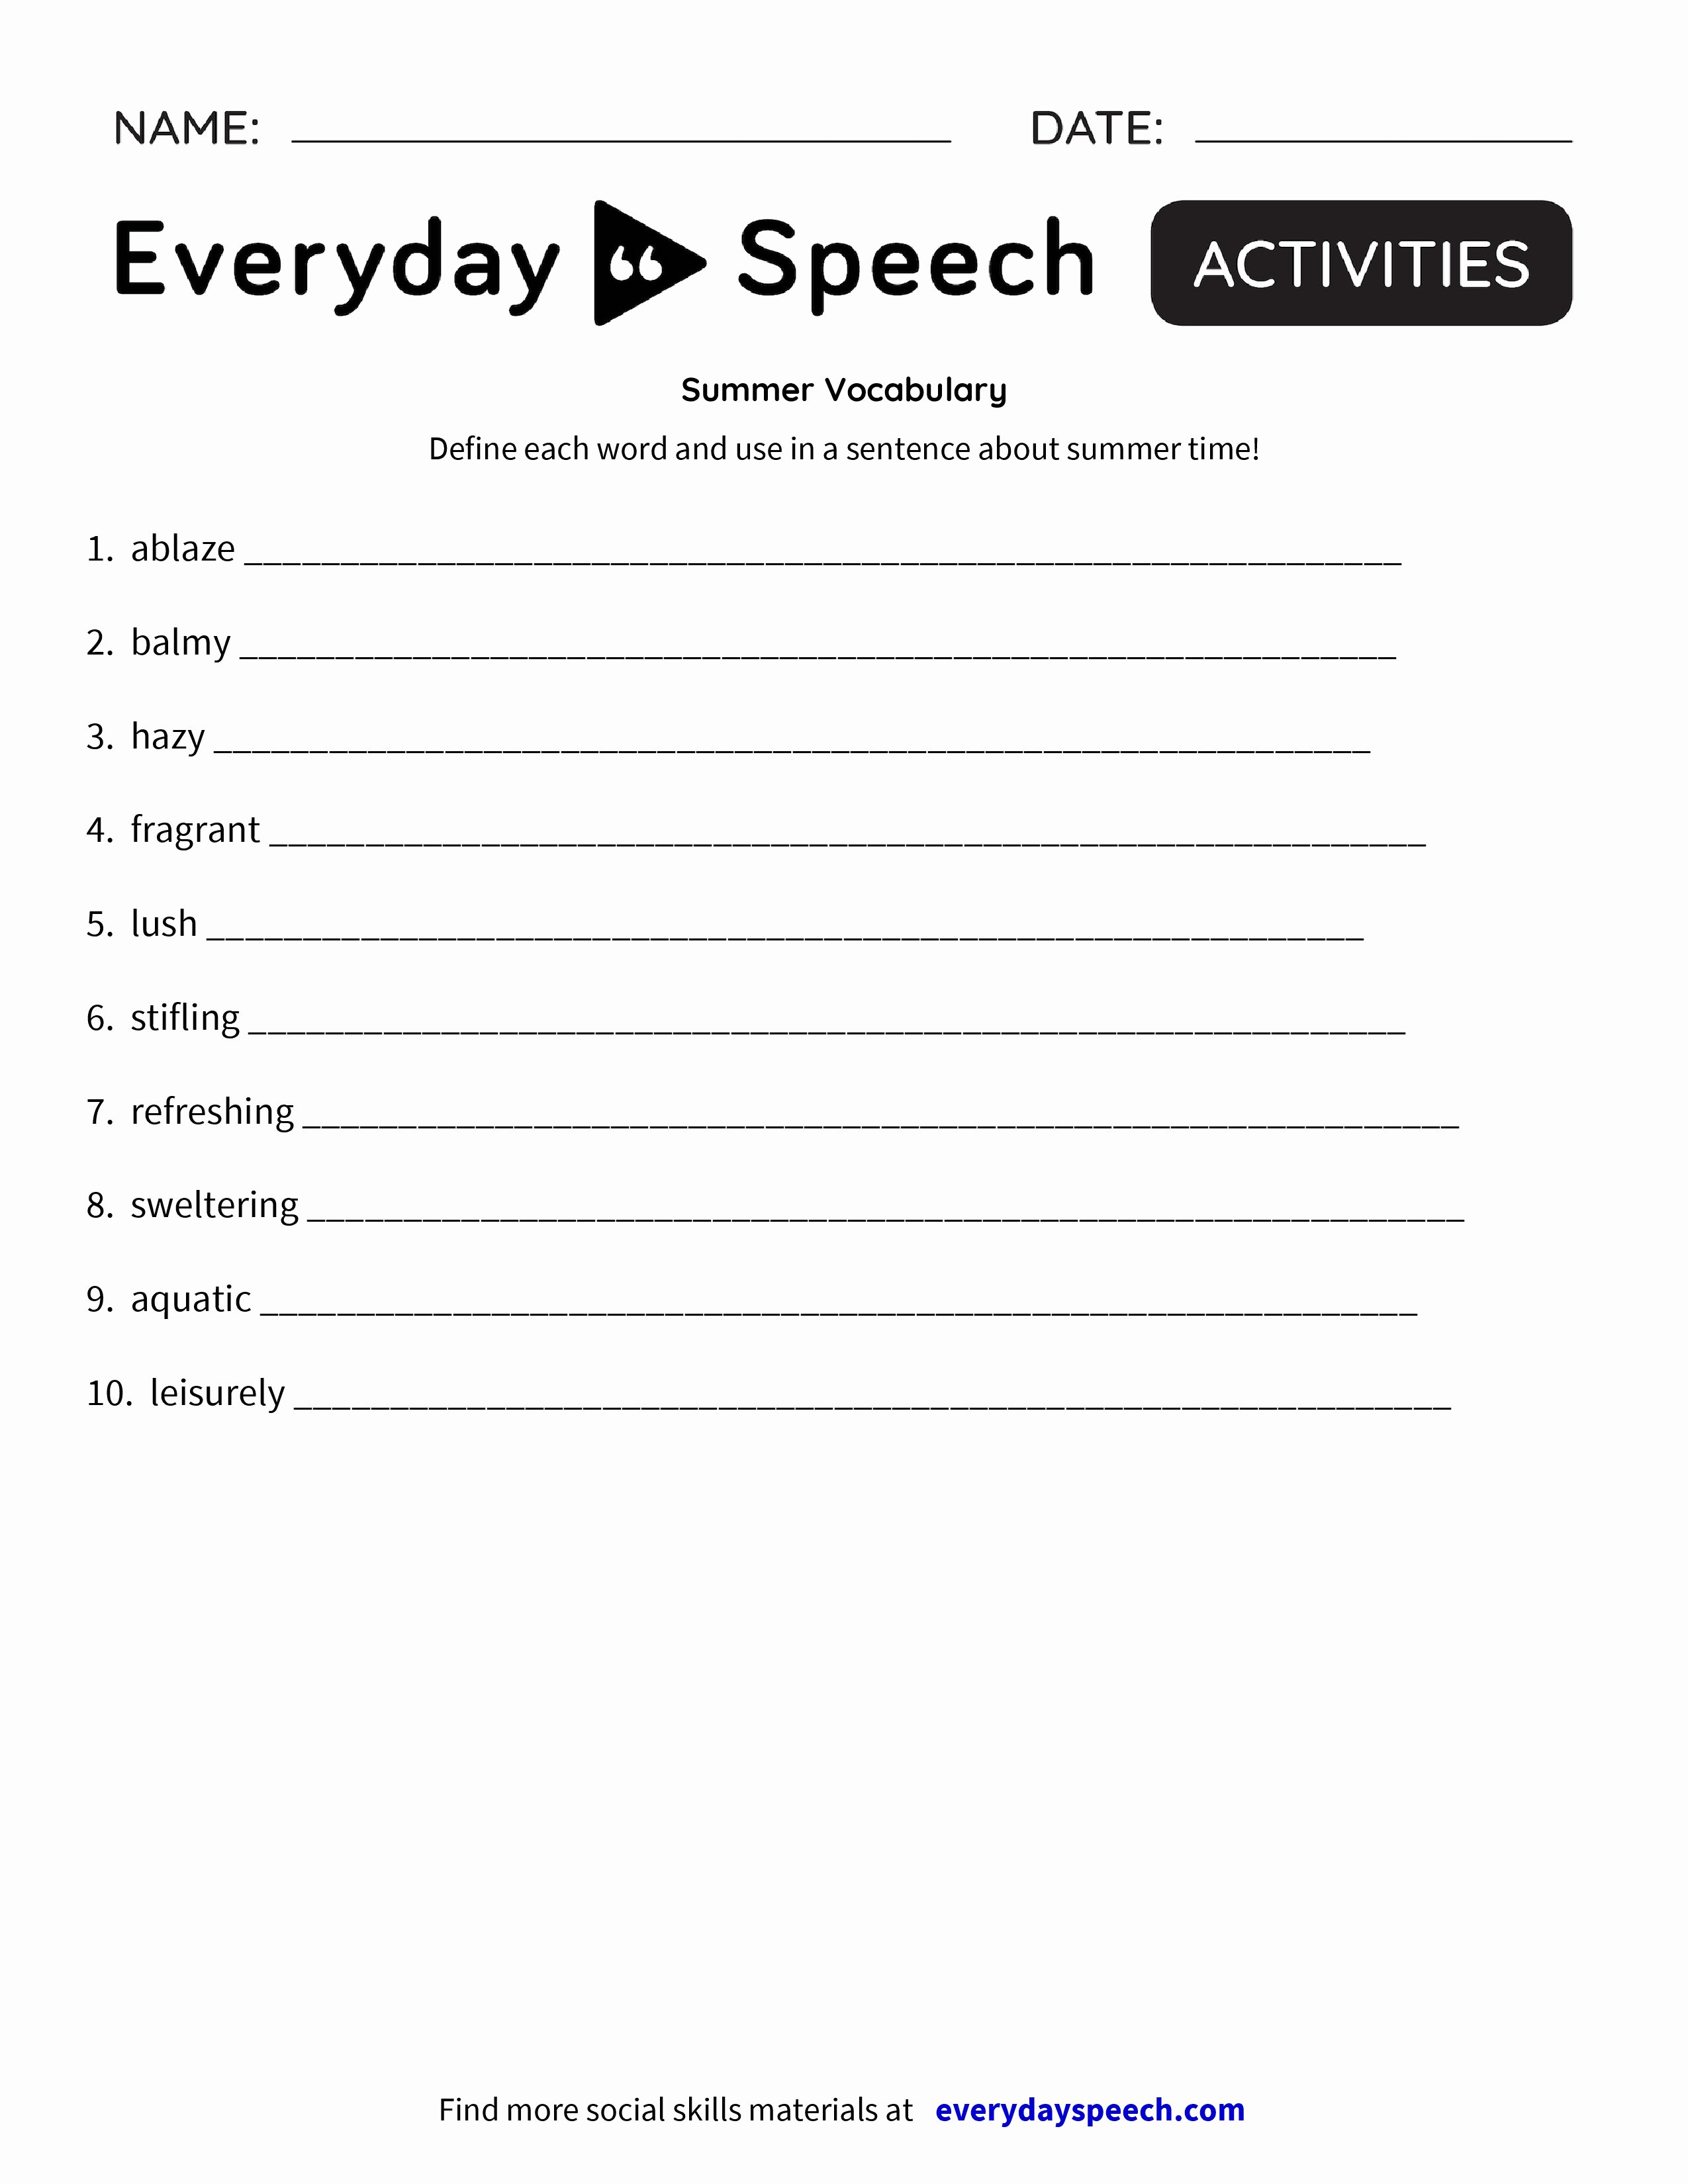 Blank Vocabulary Worksheet Template Luxury Summer Vocabulary Everyday Speech Everyday Speech